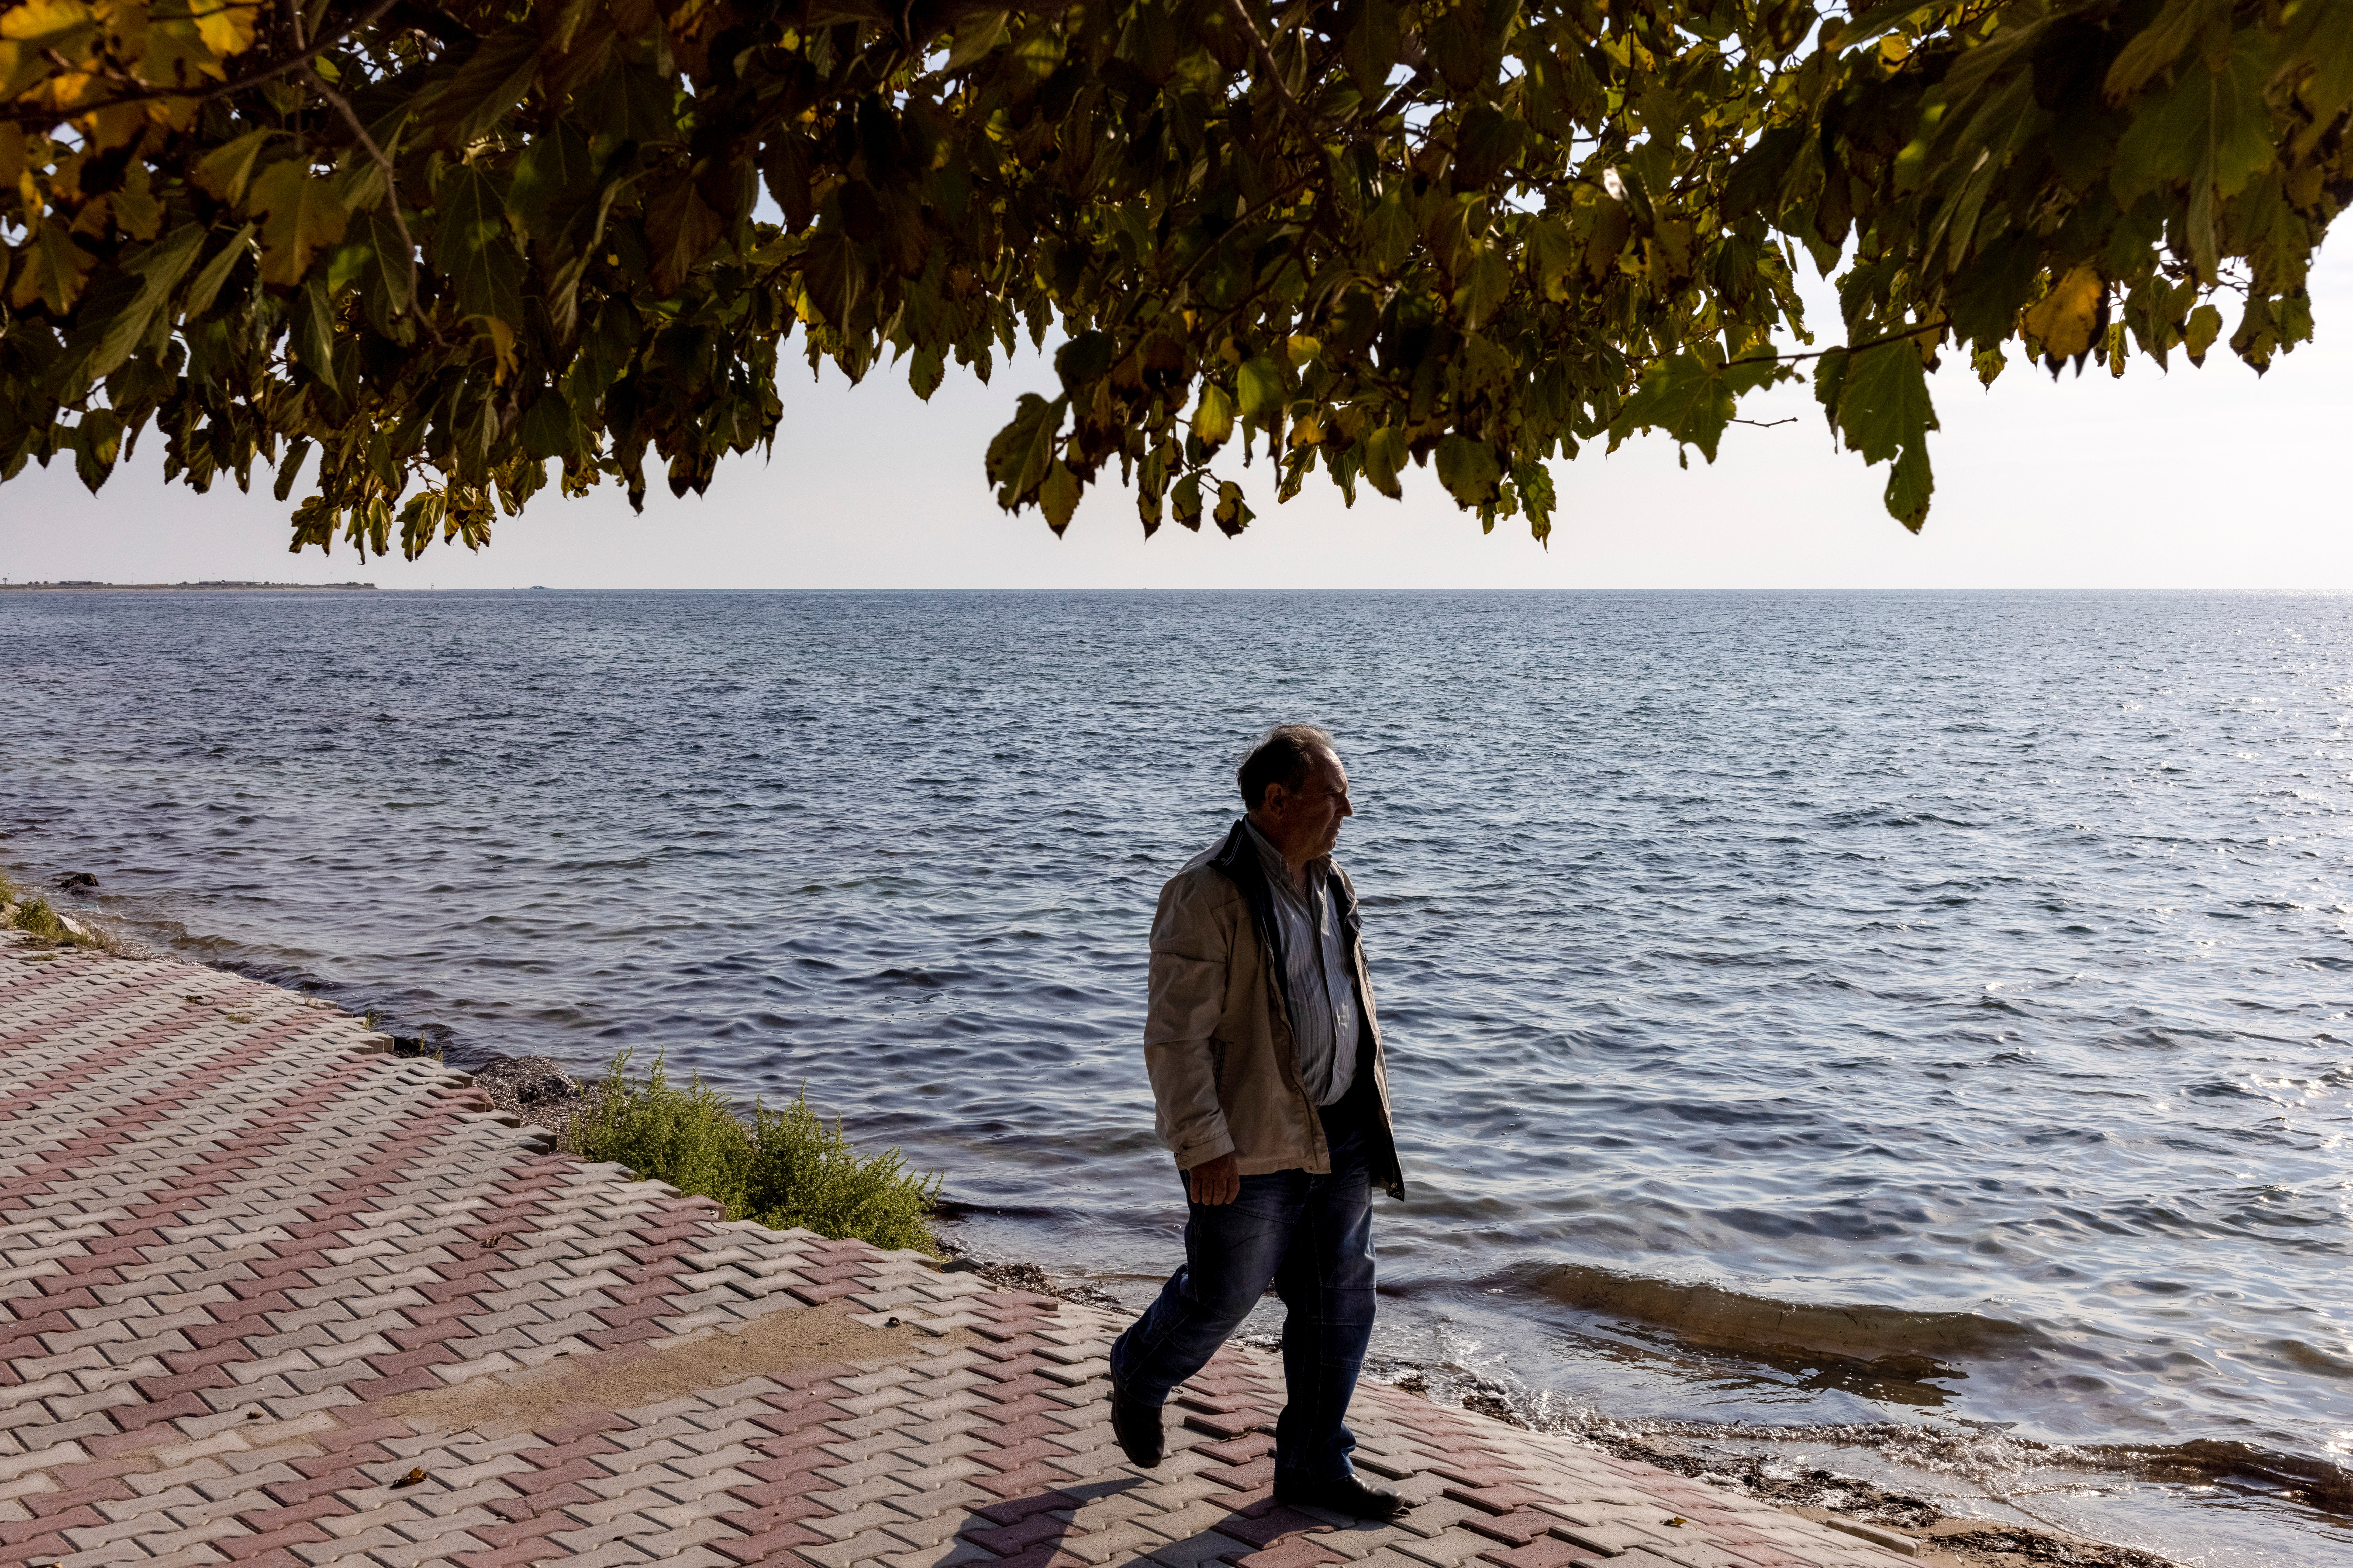 Local George Perperis walks on the damaged pedestrian street of the seaside village of Nea Irakleia, Greece, October 20, 2021. REUTERS/Alkis Konstantinidis